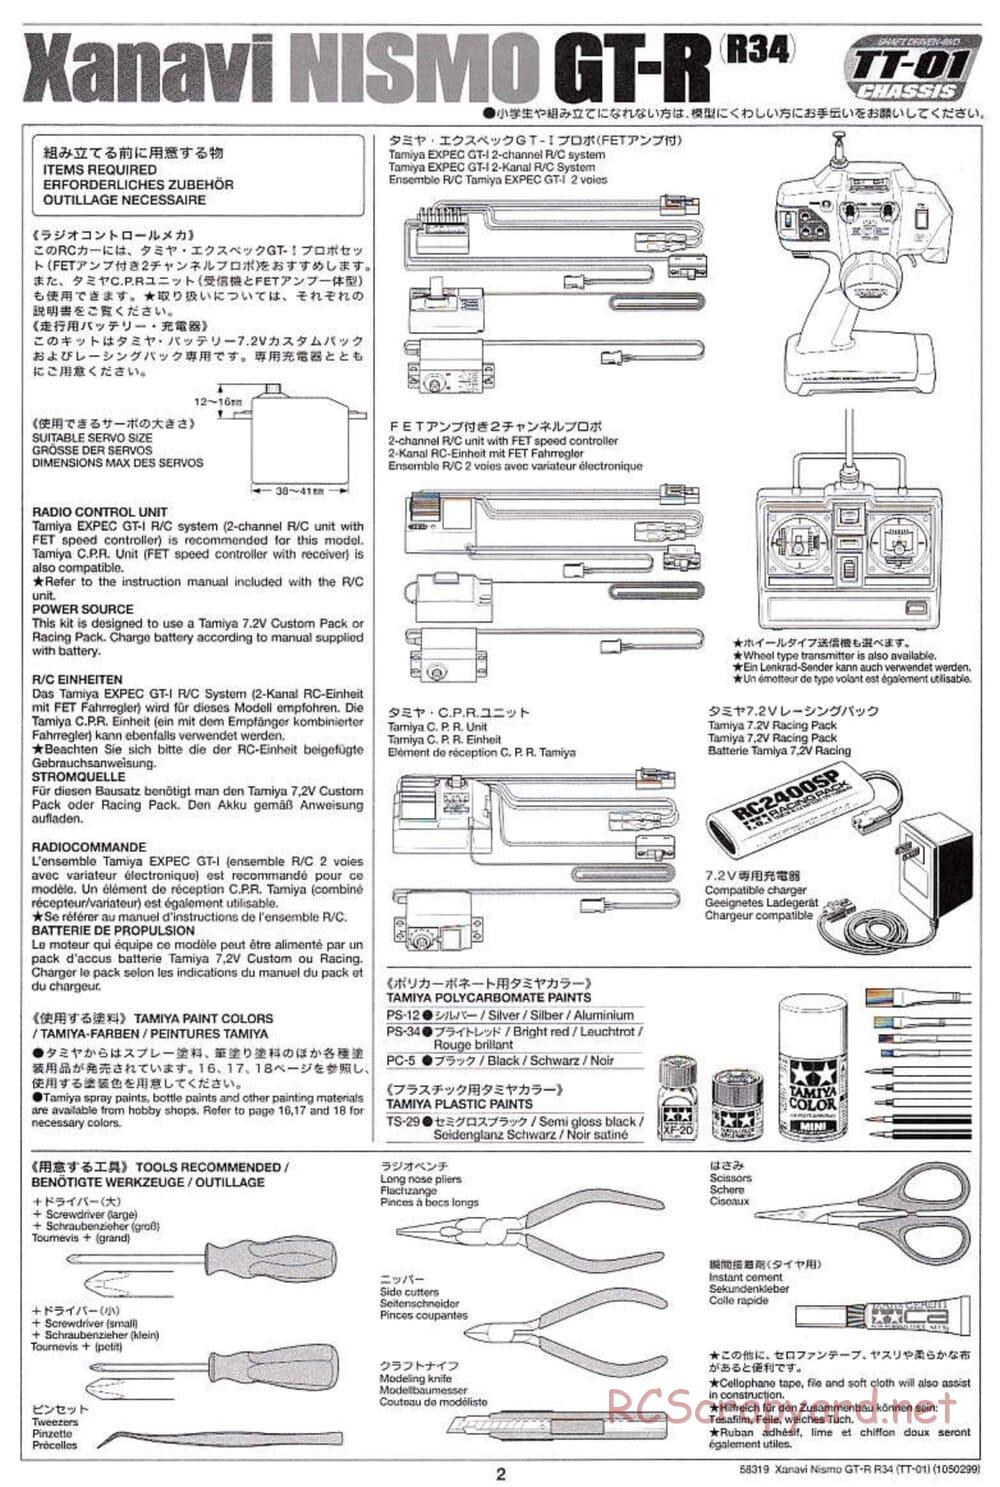 Tamiya - Xanavi Nismo GT-R R34 - TT-01 Chassis - Manual - Page 2